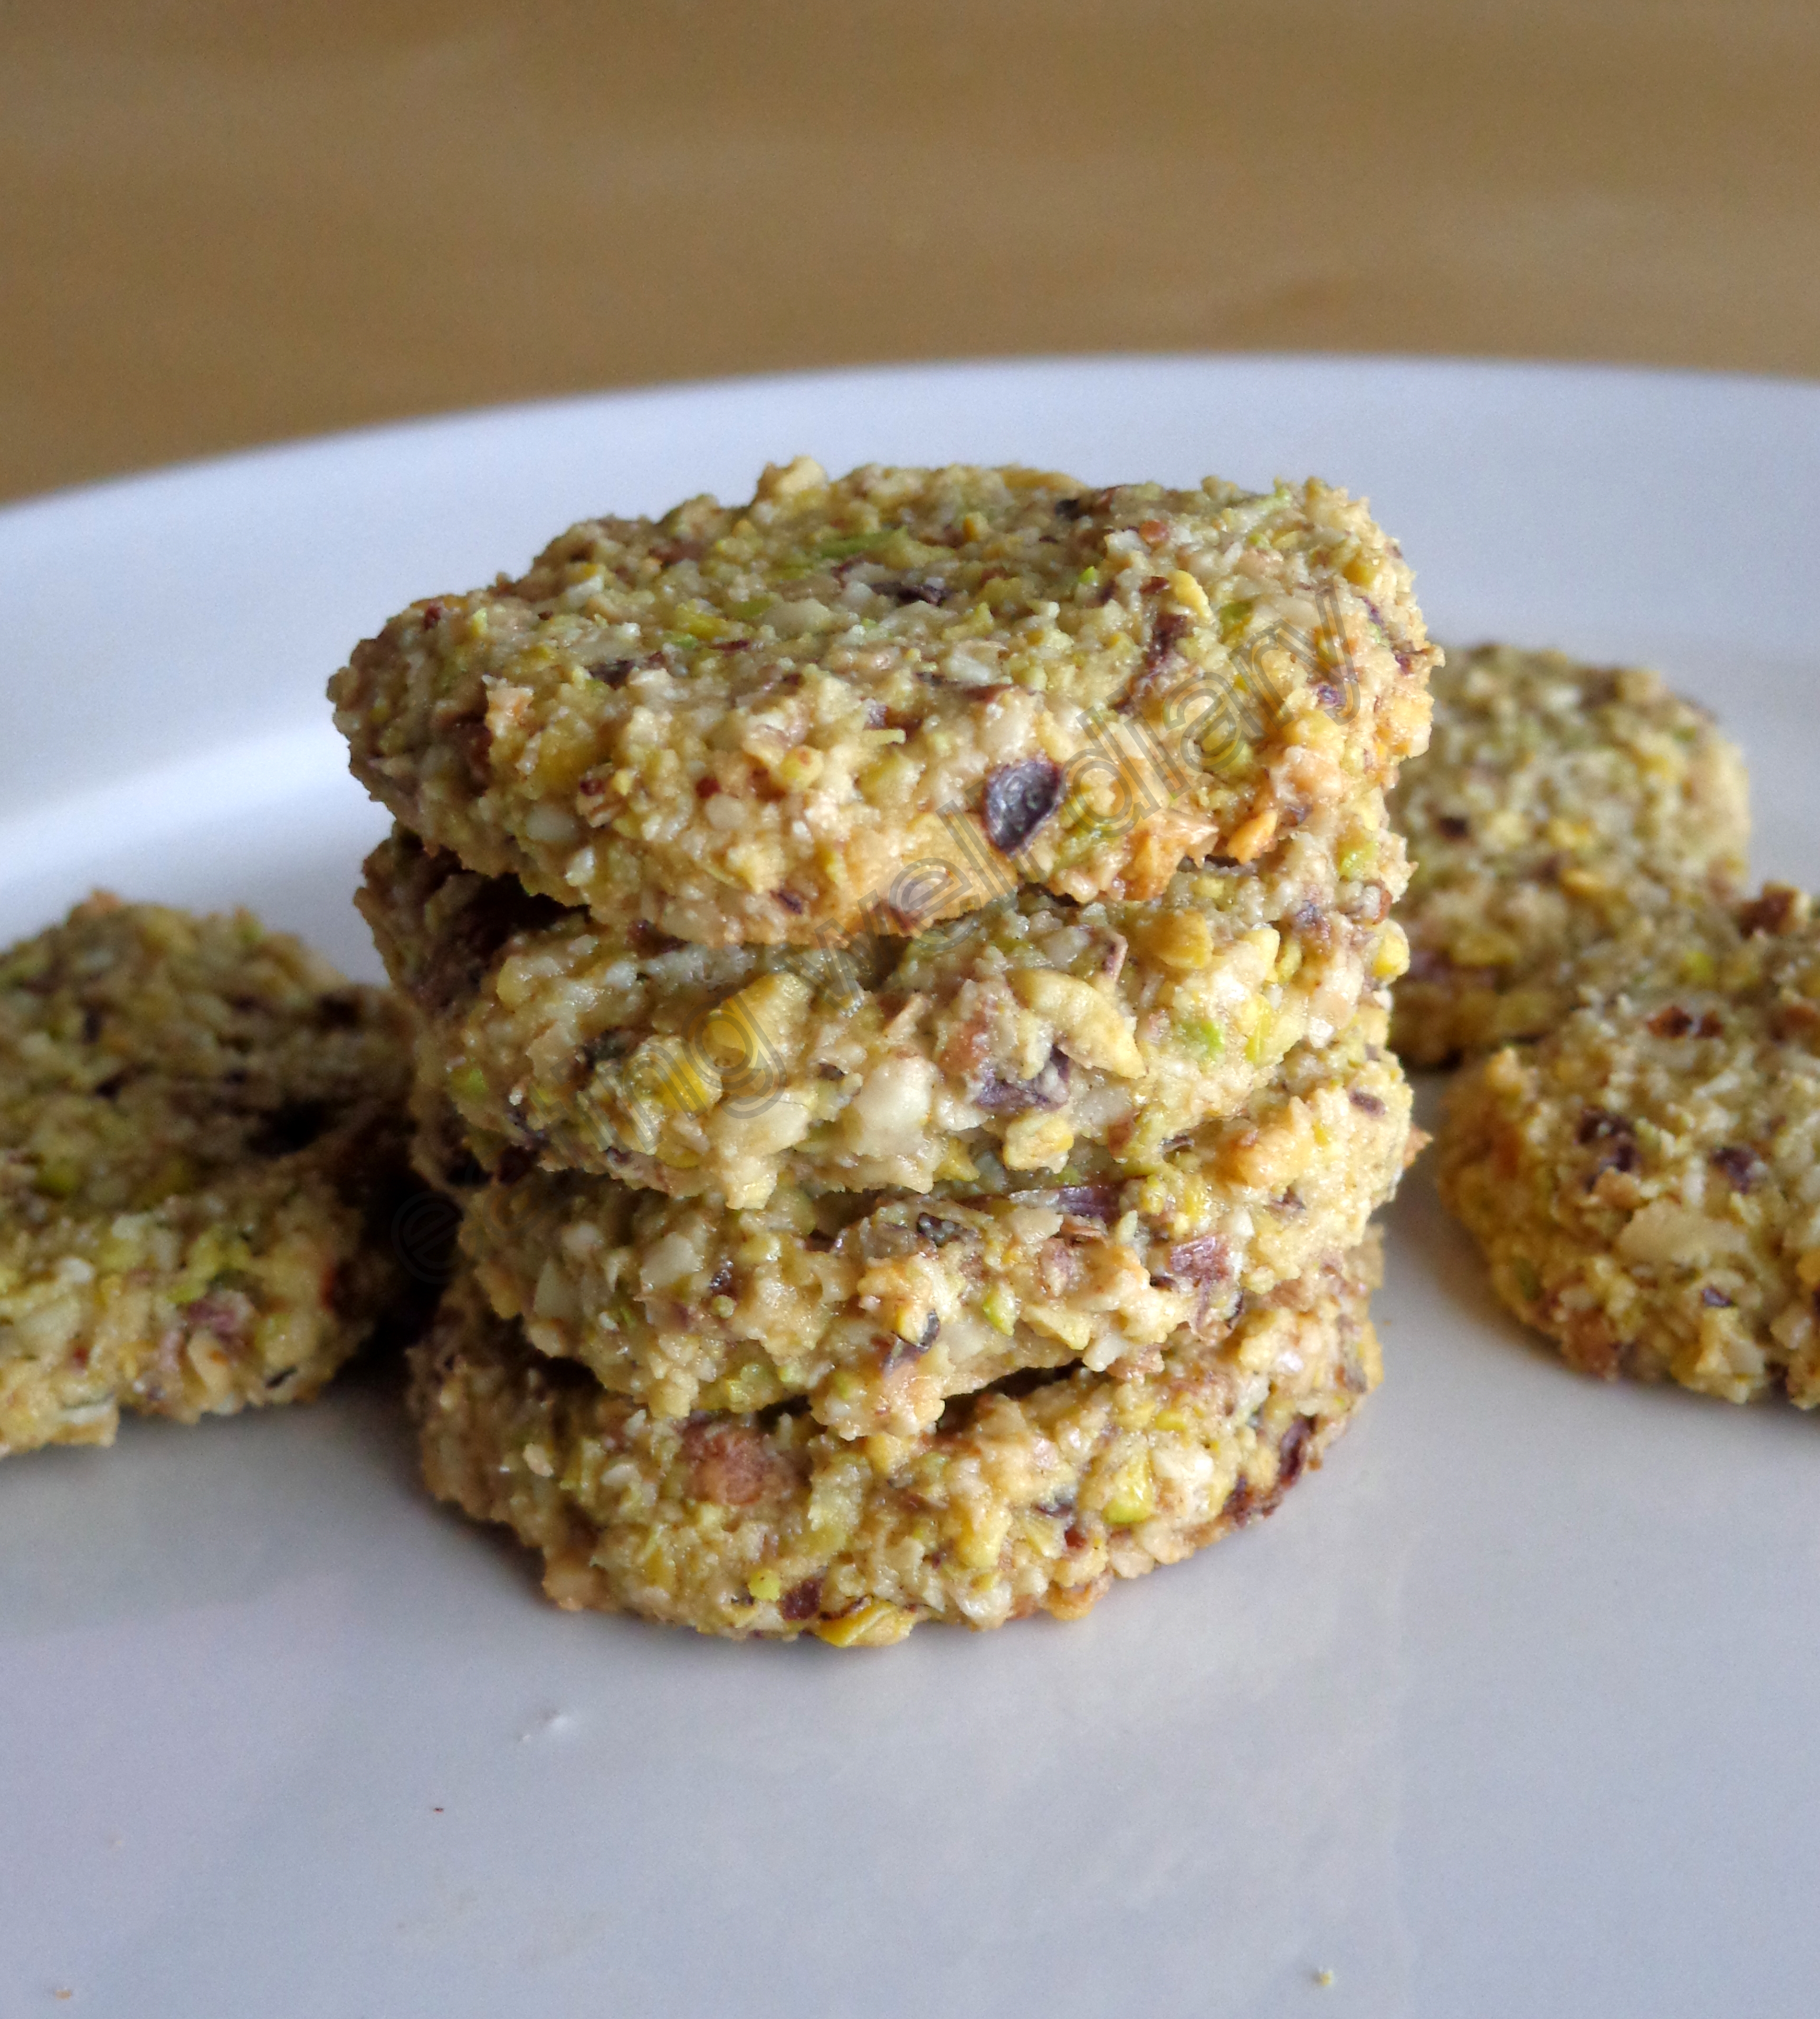 Cashew pistachio cookies (gluten-free and vegan)- the minimalist’s choice